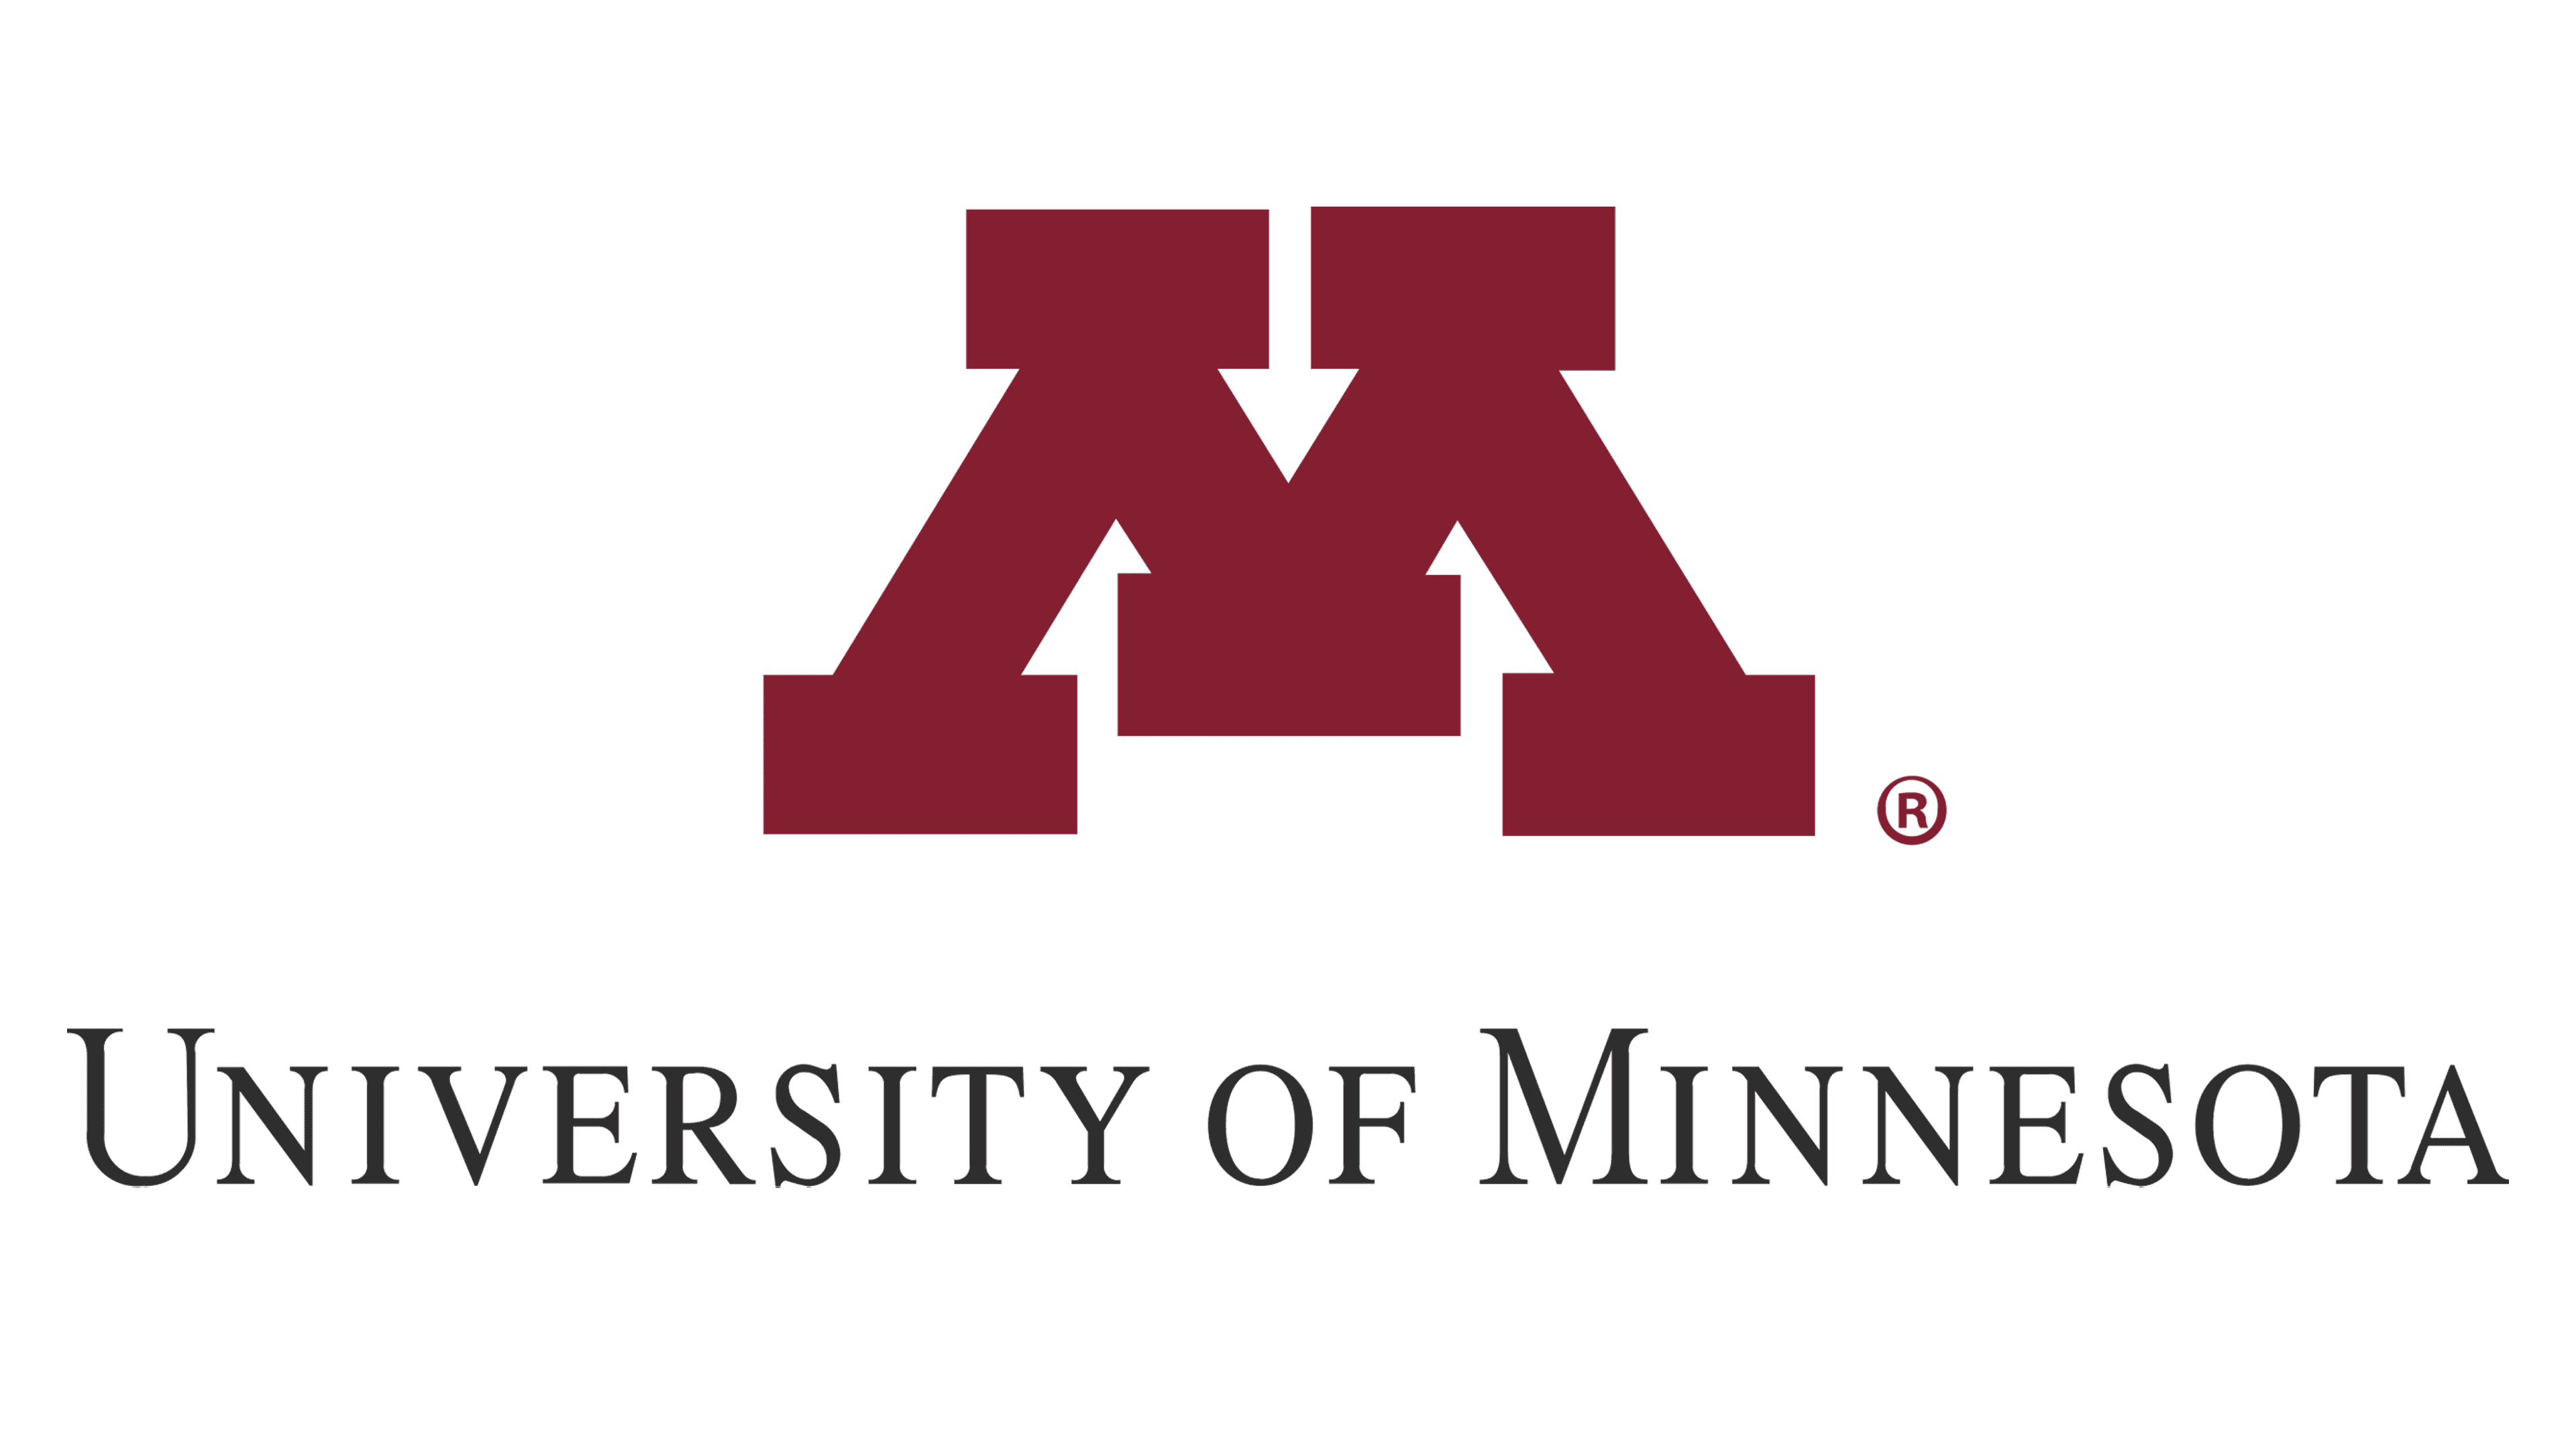 Course Descriptions - University Catalogs - University of Minnesota